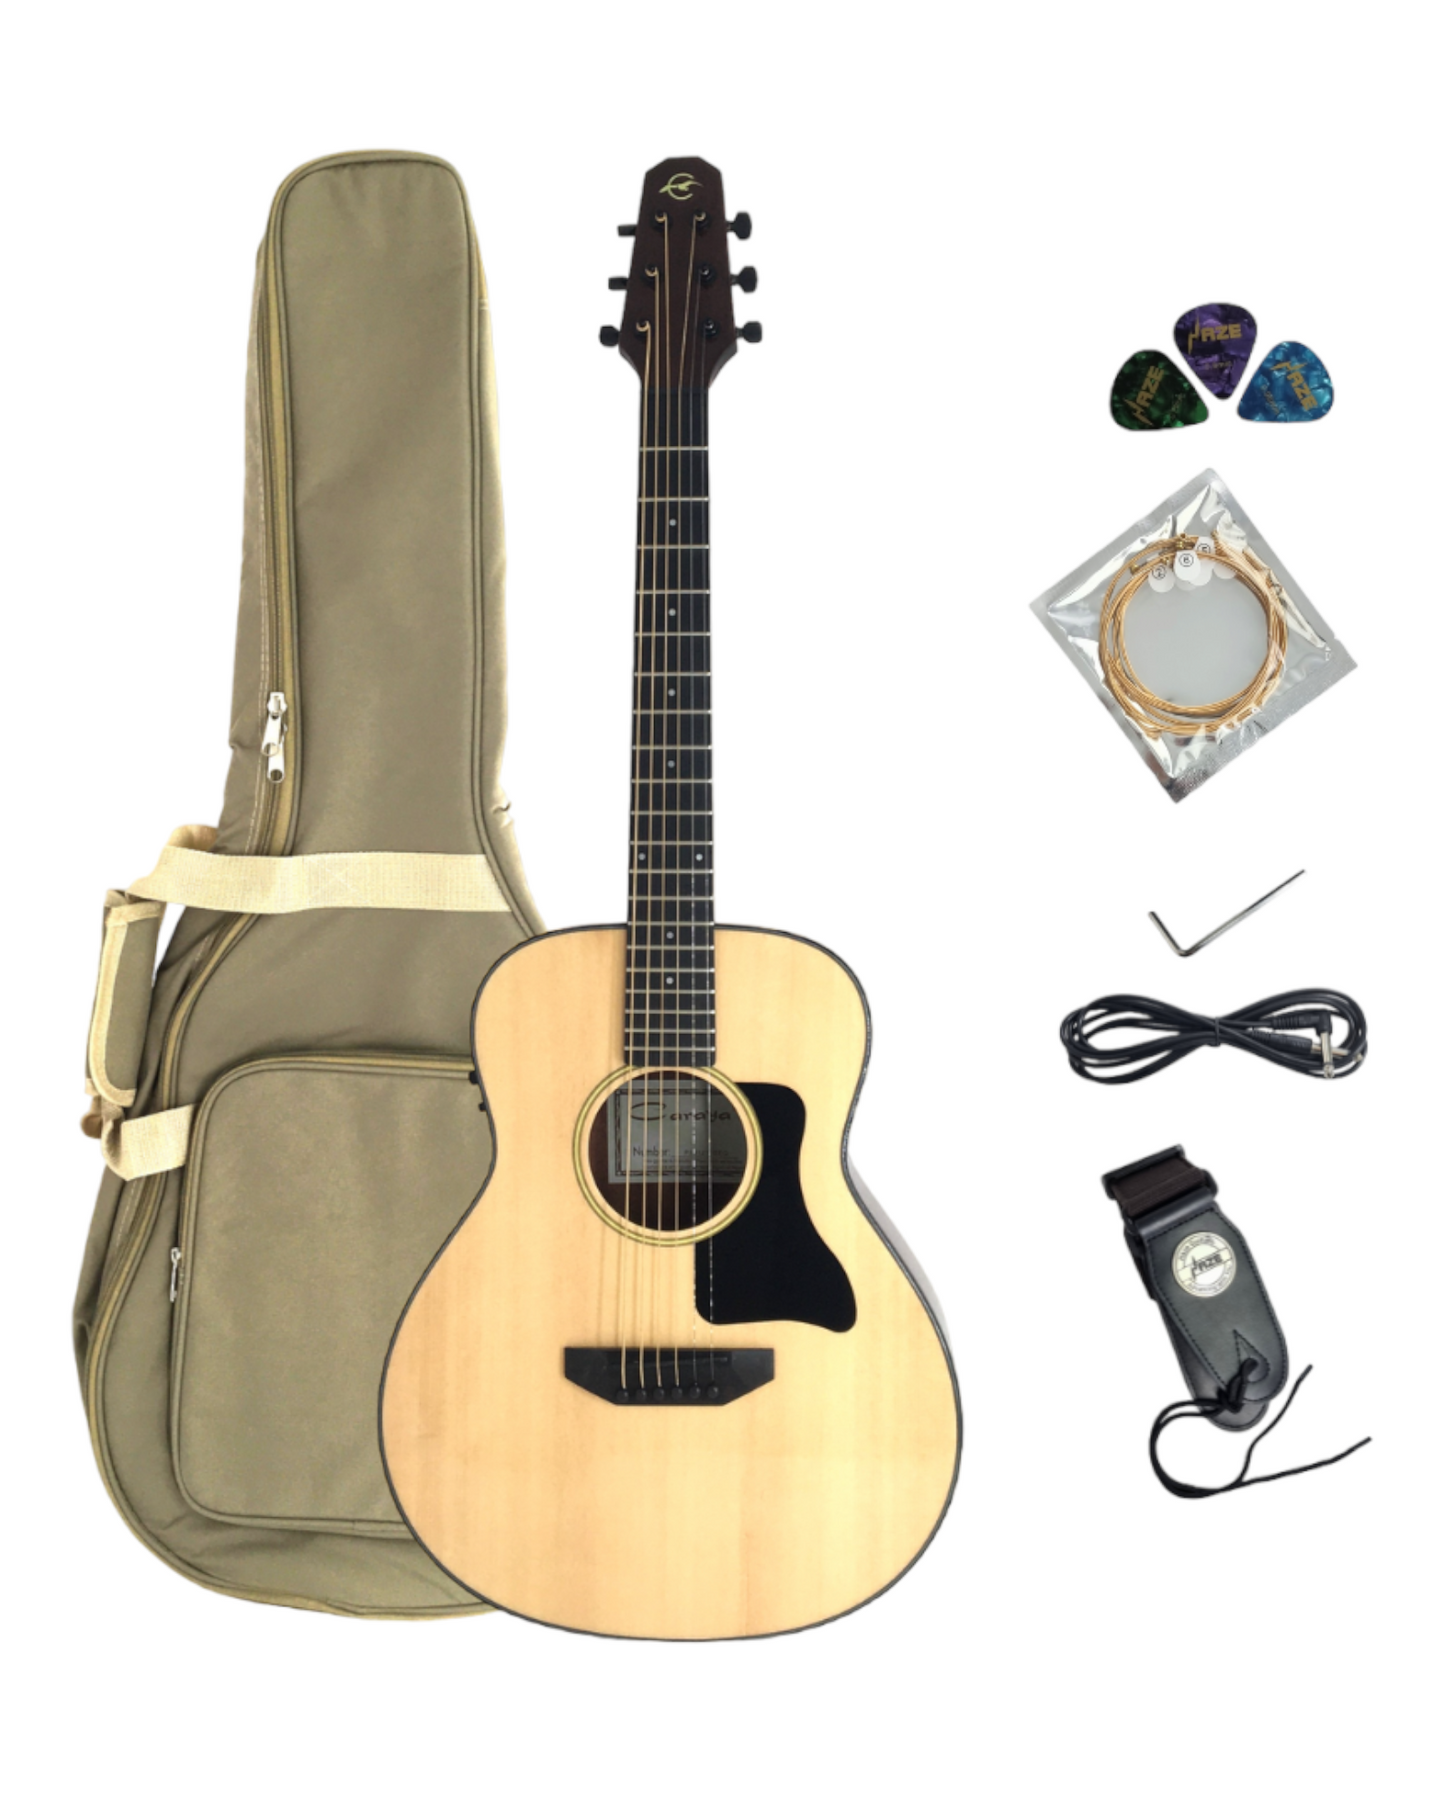 Caraya 3/4 Traveller Solid Spruce Built-In Pickups/Tuner Acoustic Guitar - Natural P301210SEQ